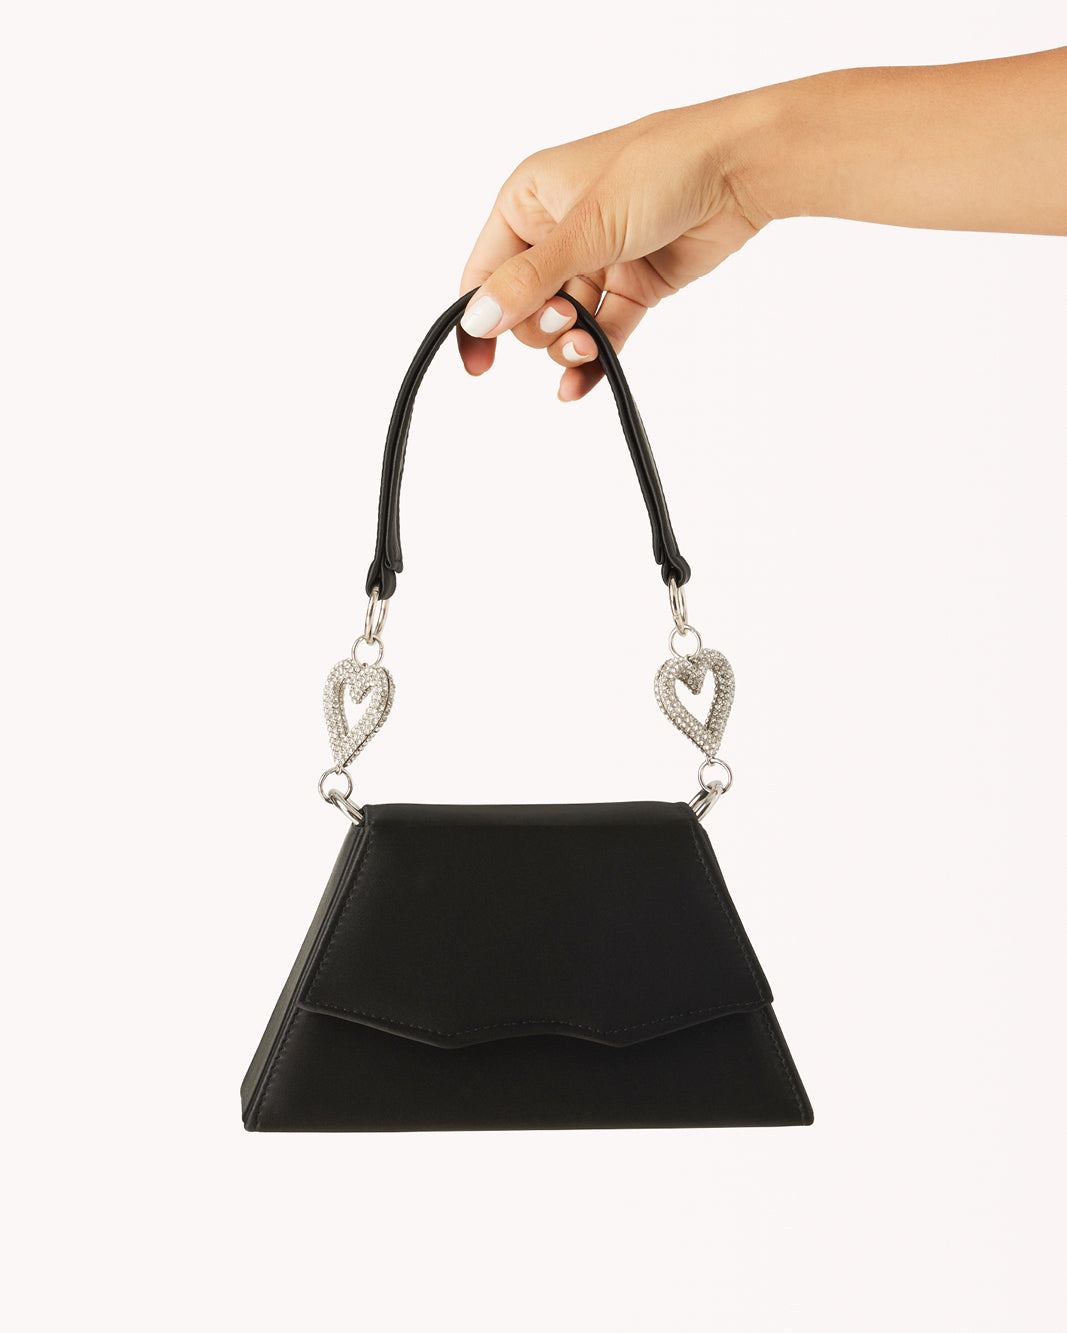 ADDISON HANDLE BAG - BLACK SATIN-Handbags-Billini-O/S-Billini